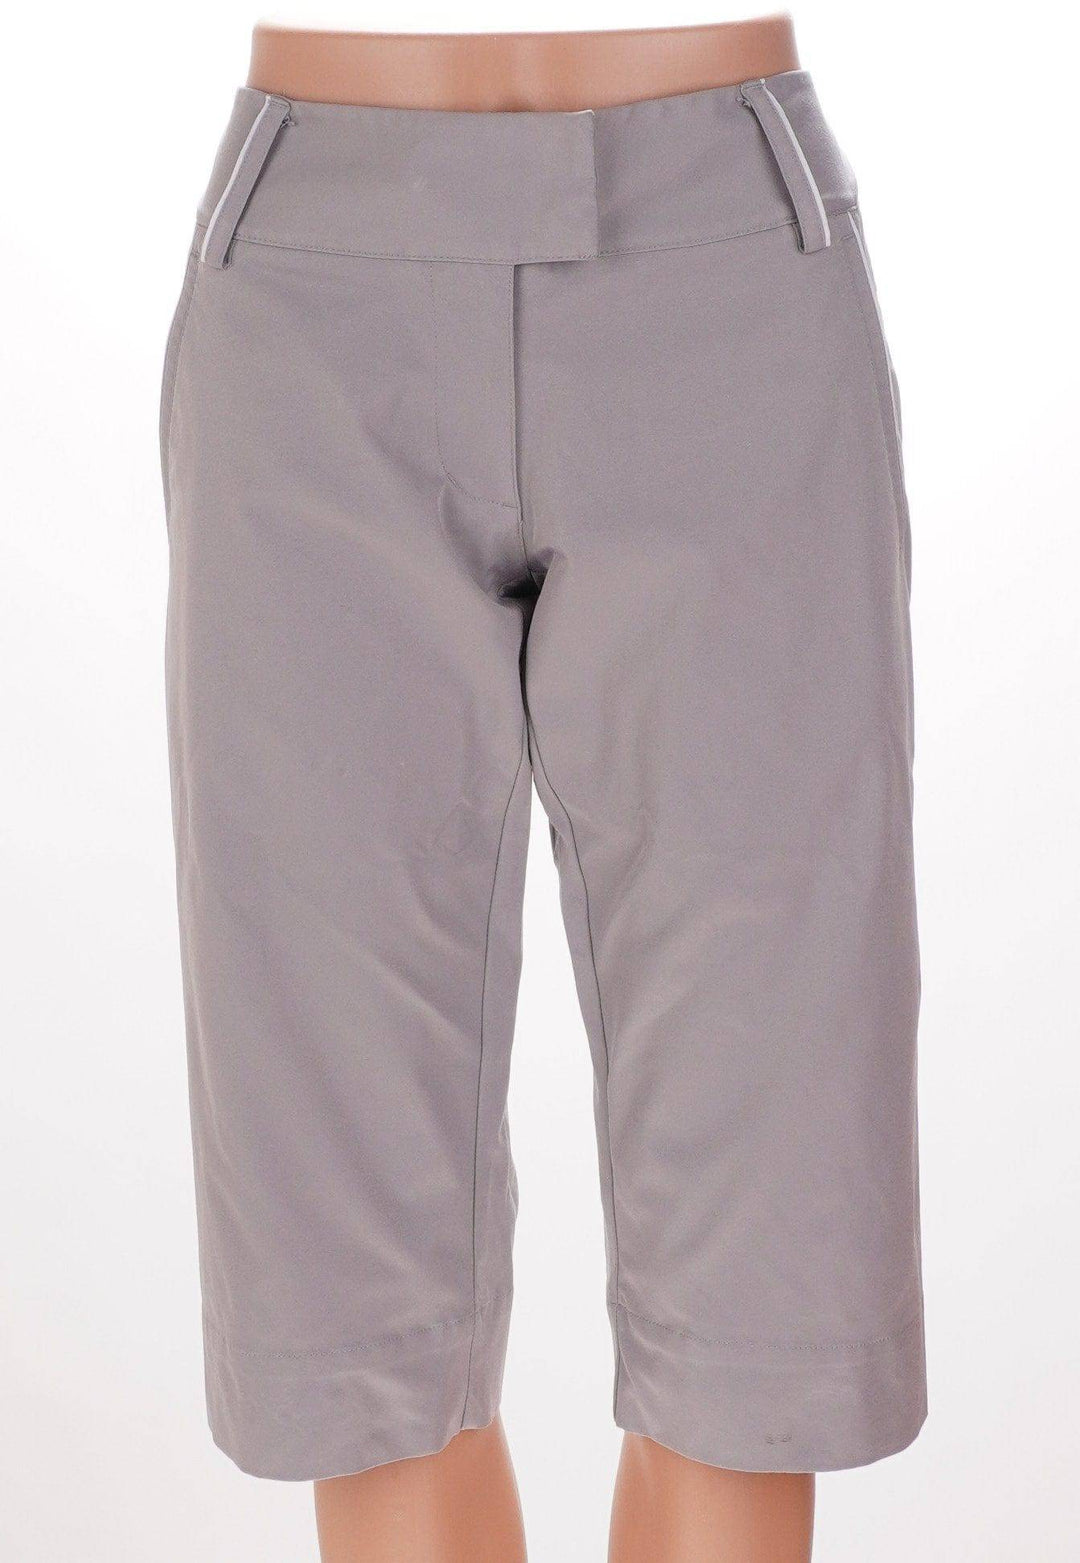 Adidas 2 / Gray / Consigned Adidas Golf Shorts - Grey - Size 2